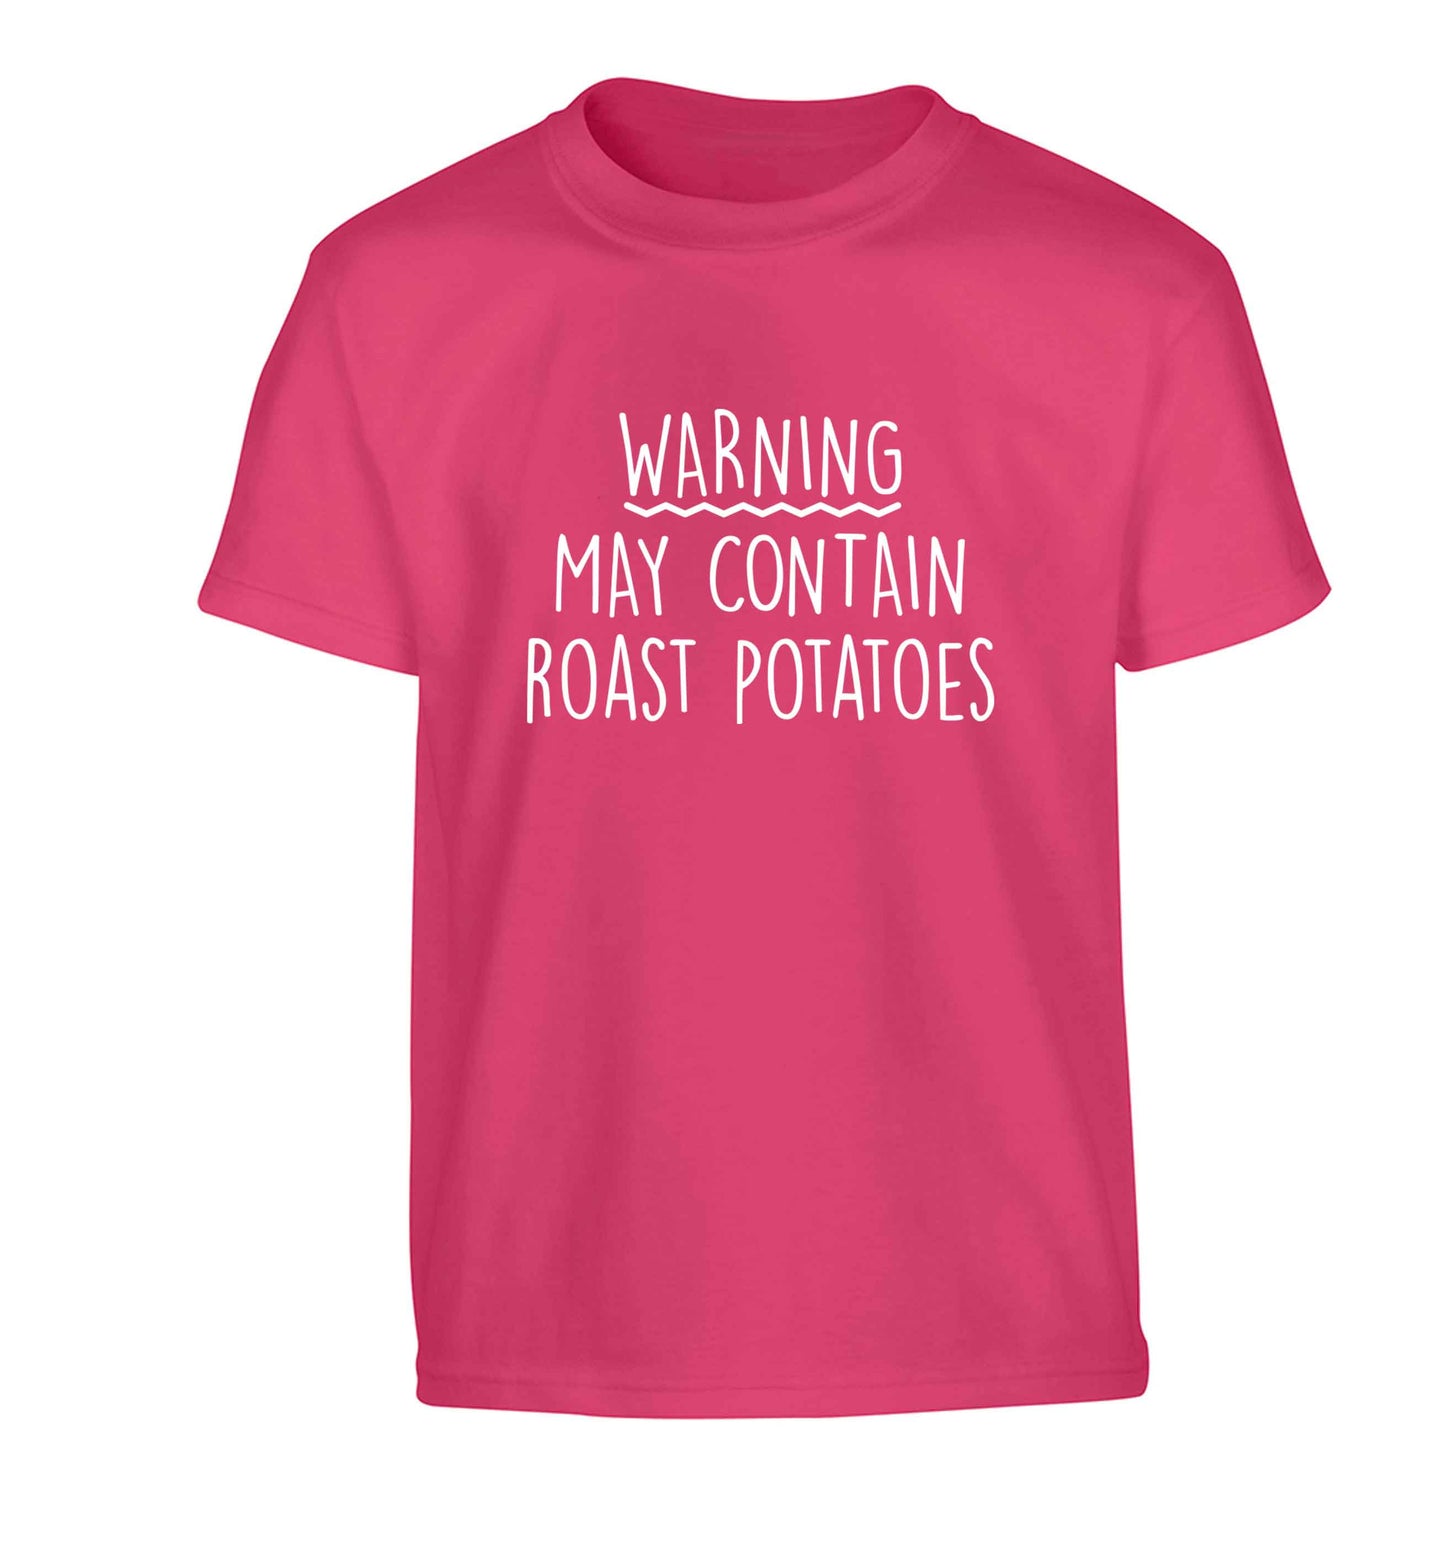 Warning may containg roast potatoes Children's pink Tshirt 12-13 Years